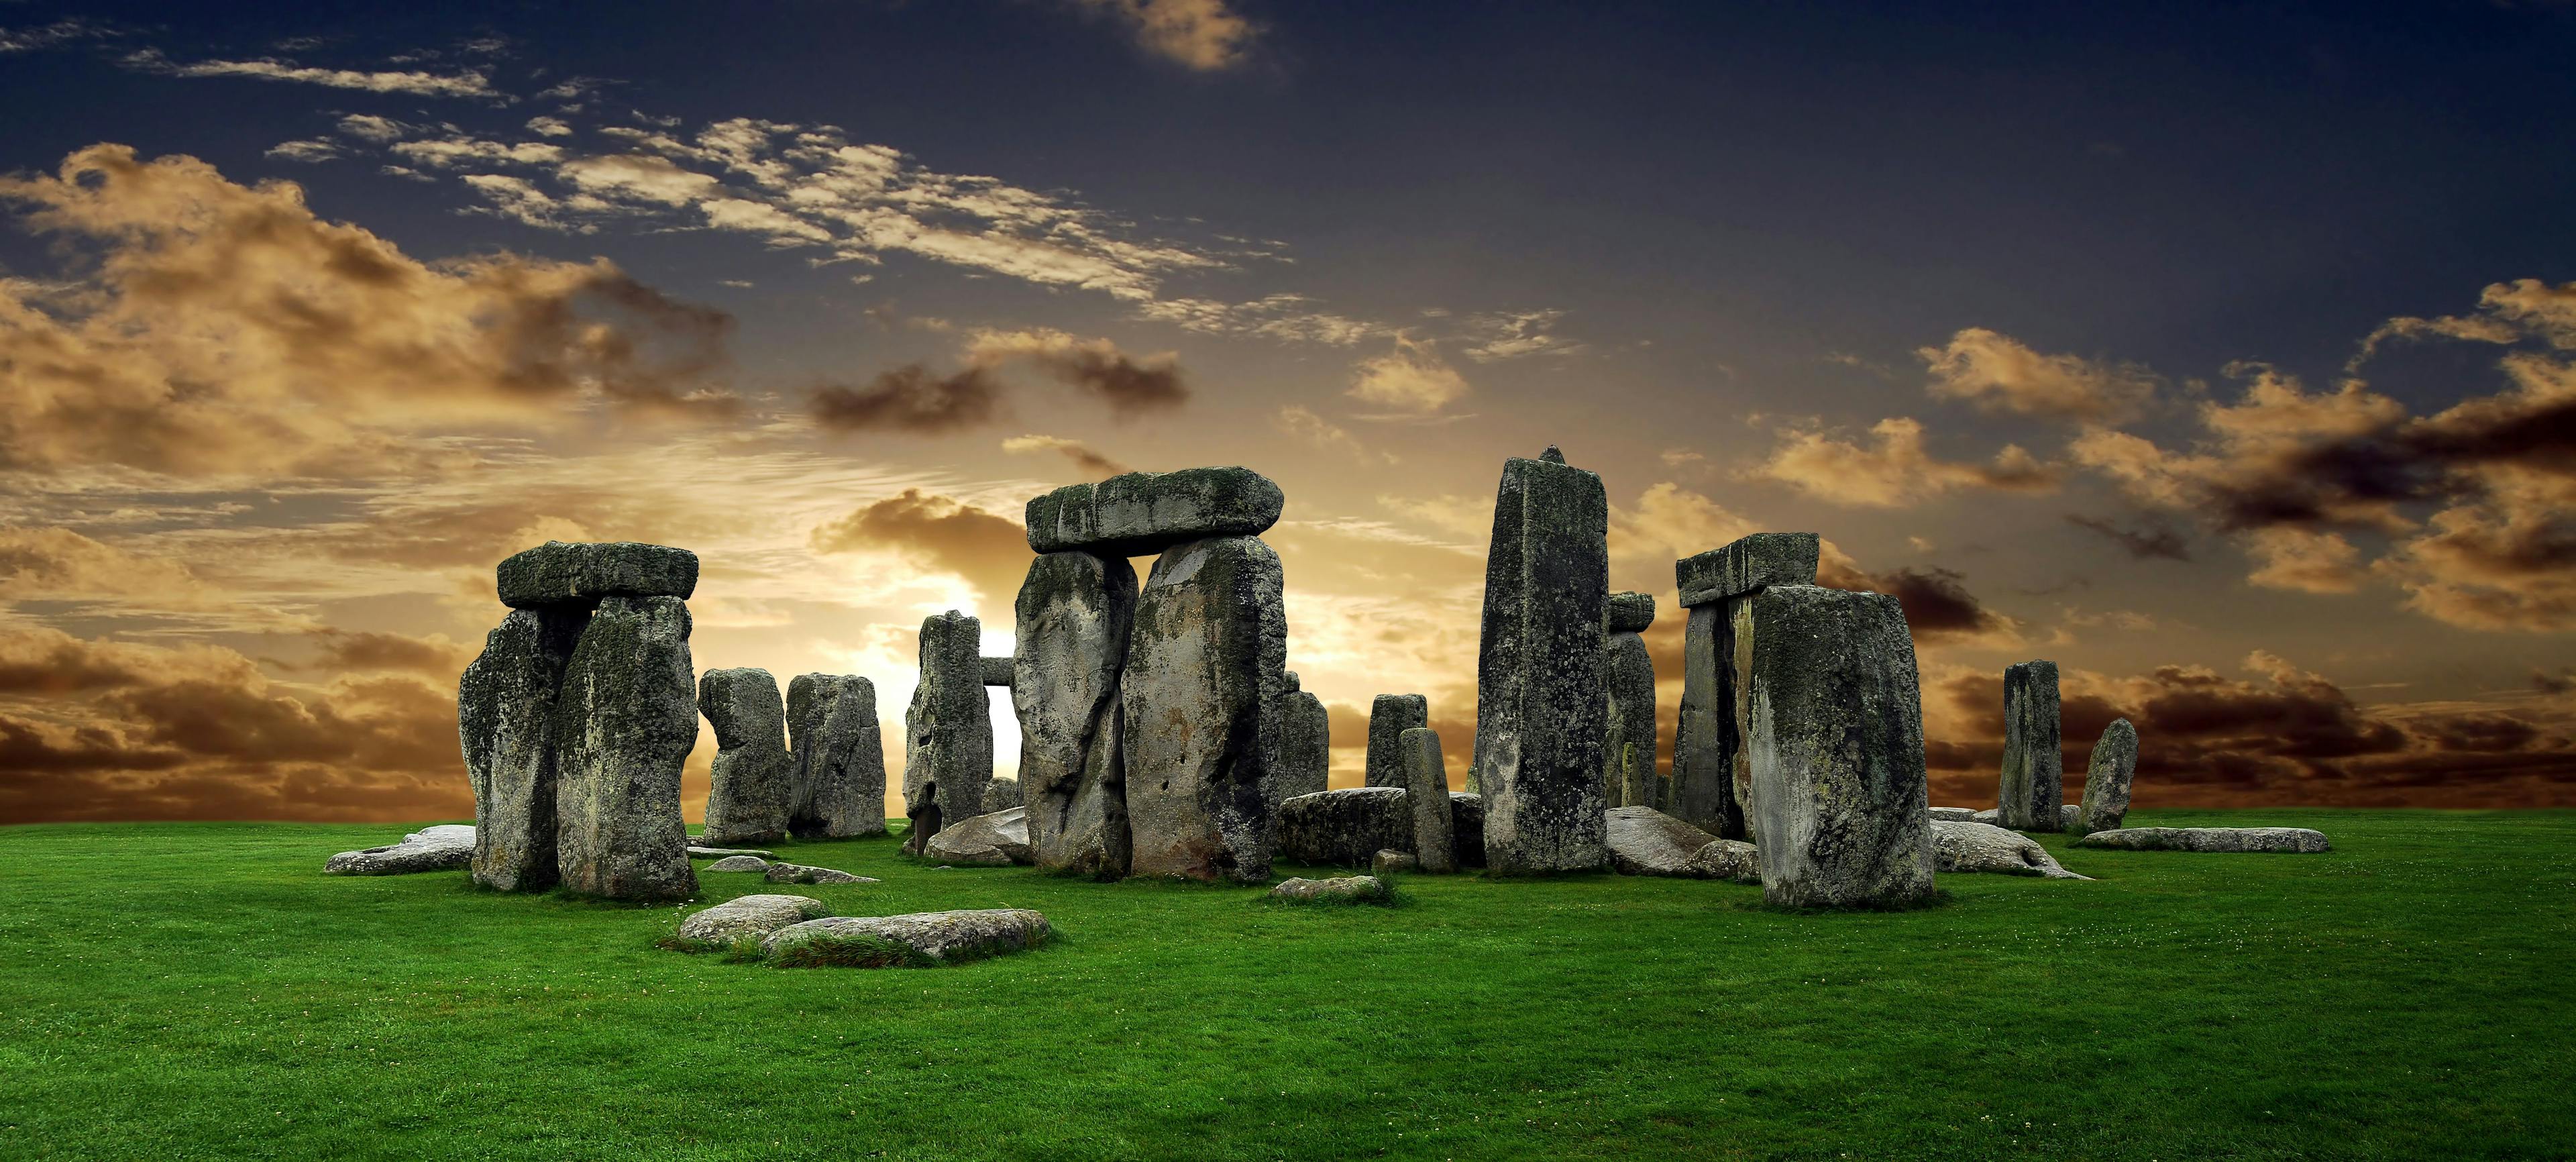 Stonehenge | Image Credit: © Albo - stock.adobe.com